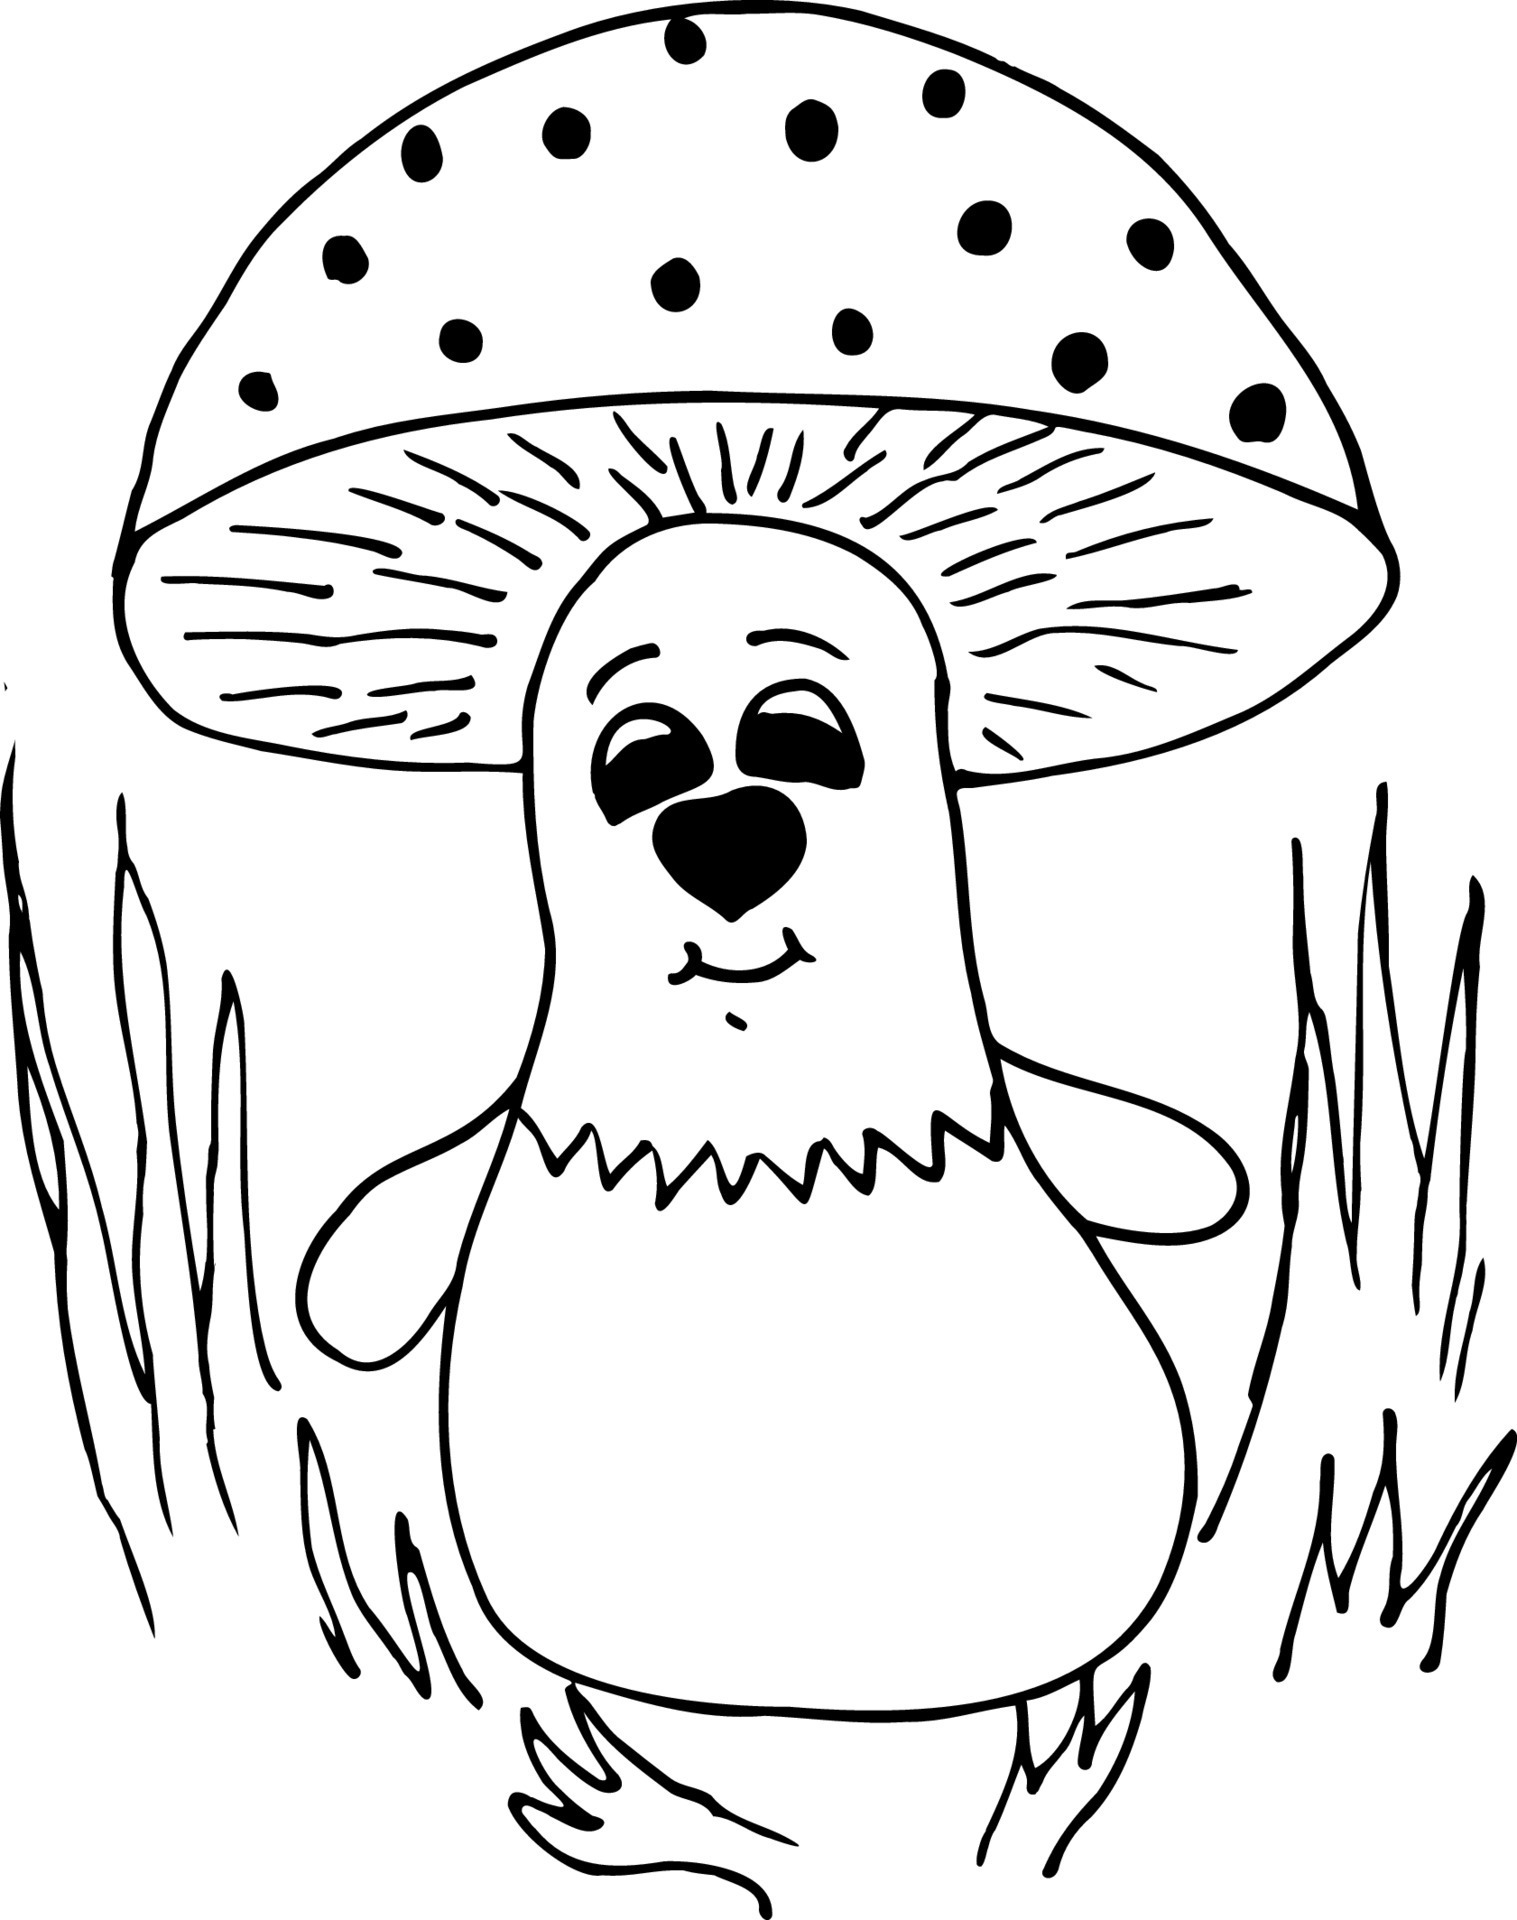 Cute cartoon mushroom charcter illustralion. Drown line art wit black lhin  line 7794159 Vector Art at Vecteezy